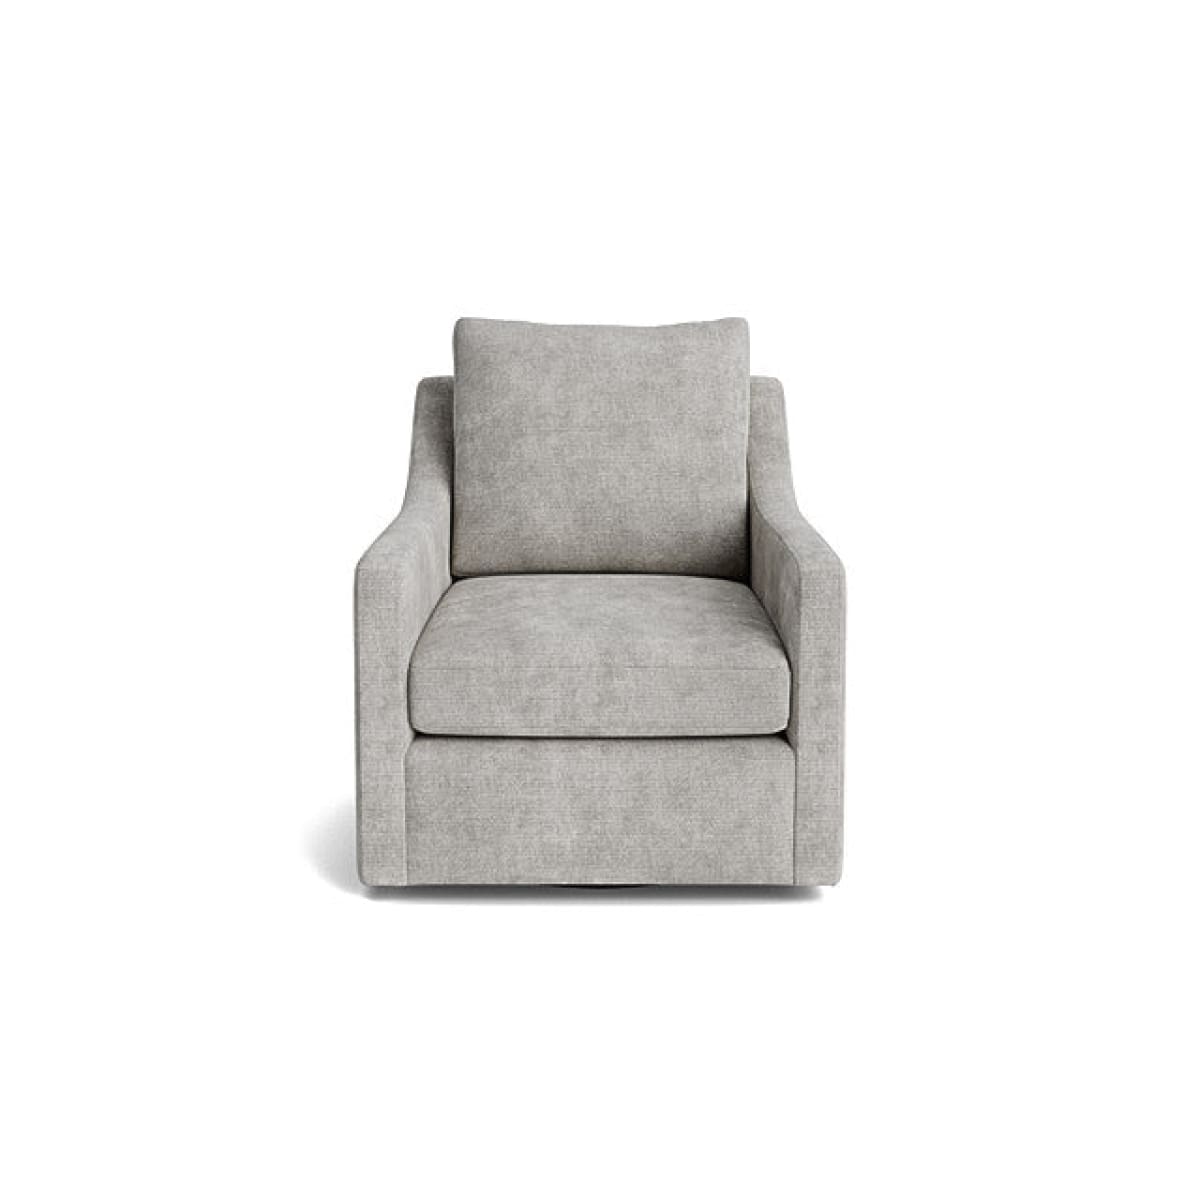 Grove Accent Chair - Husky Grey